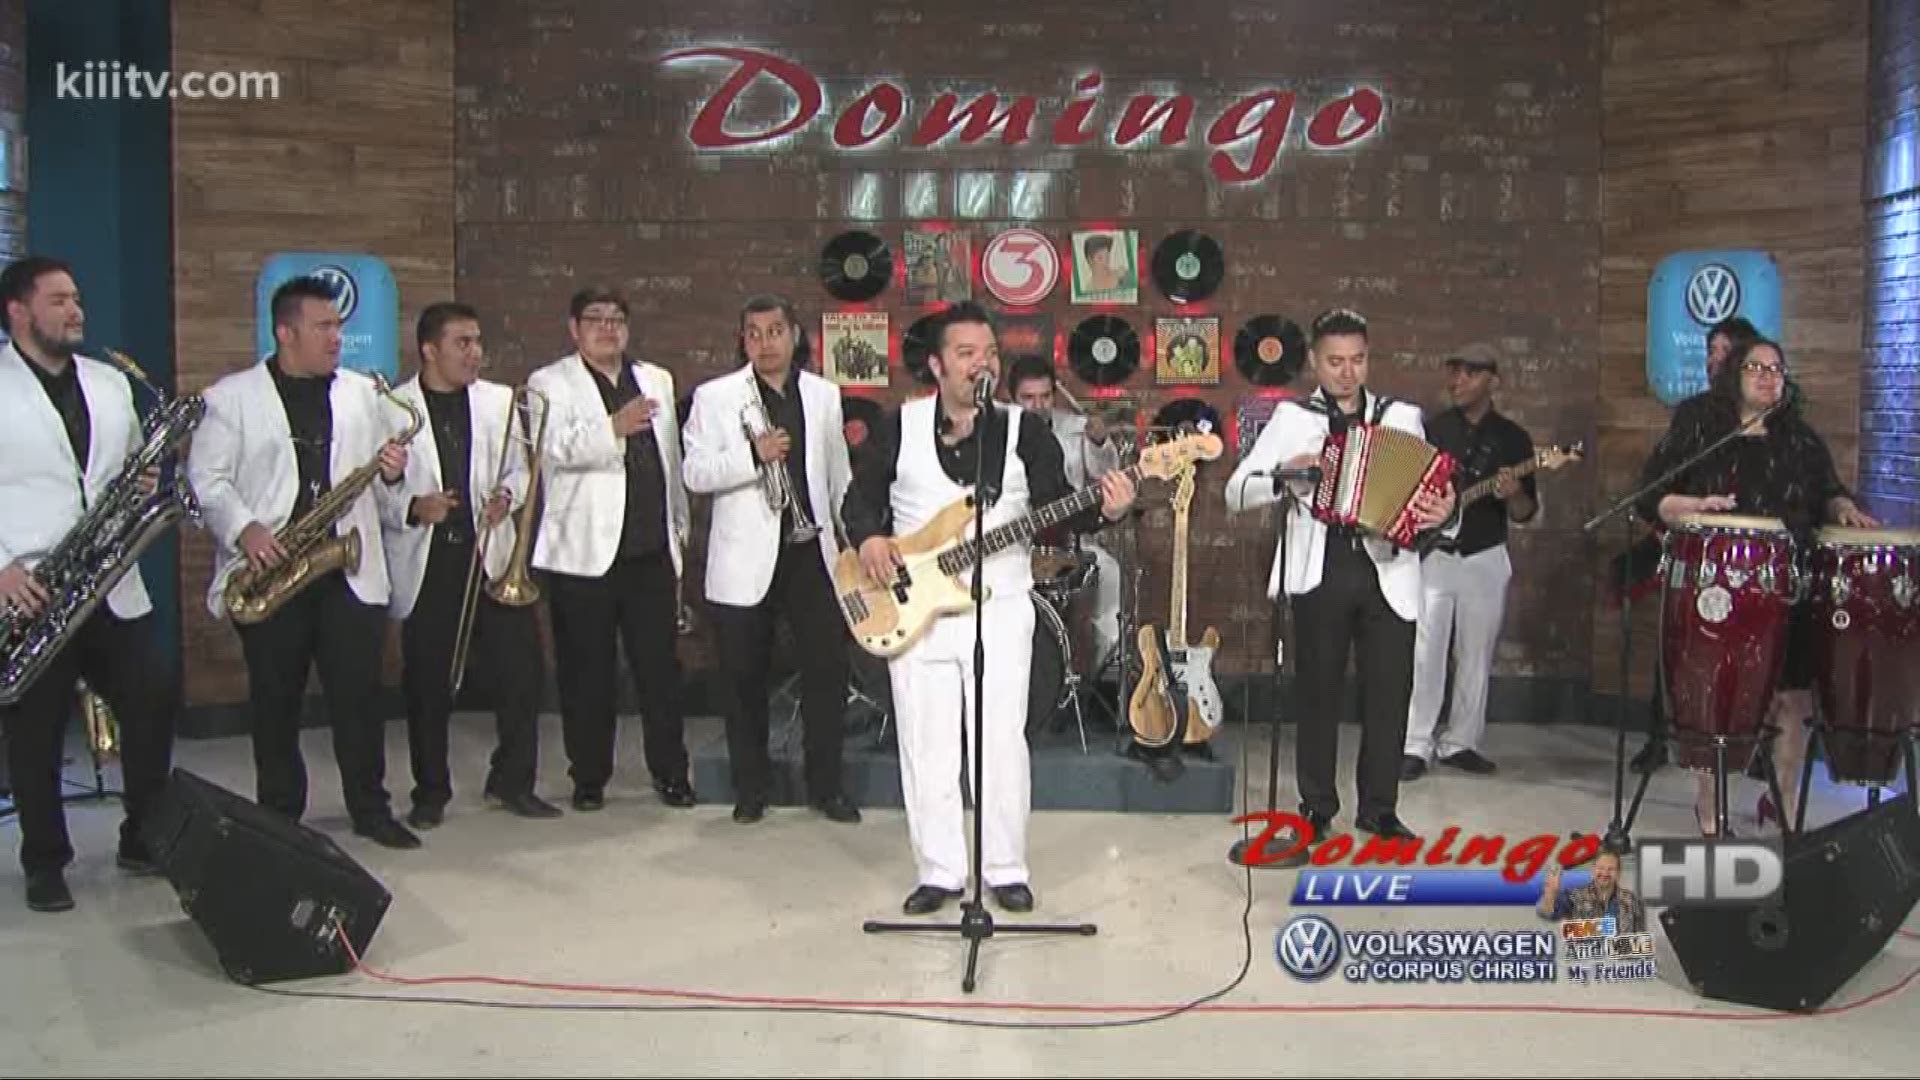 La 45 performing "La Zampa" on Domingo Live!